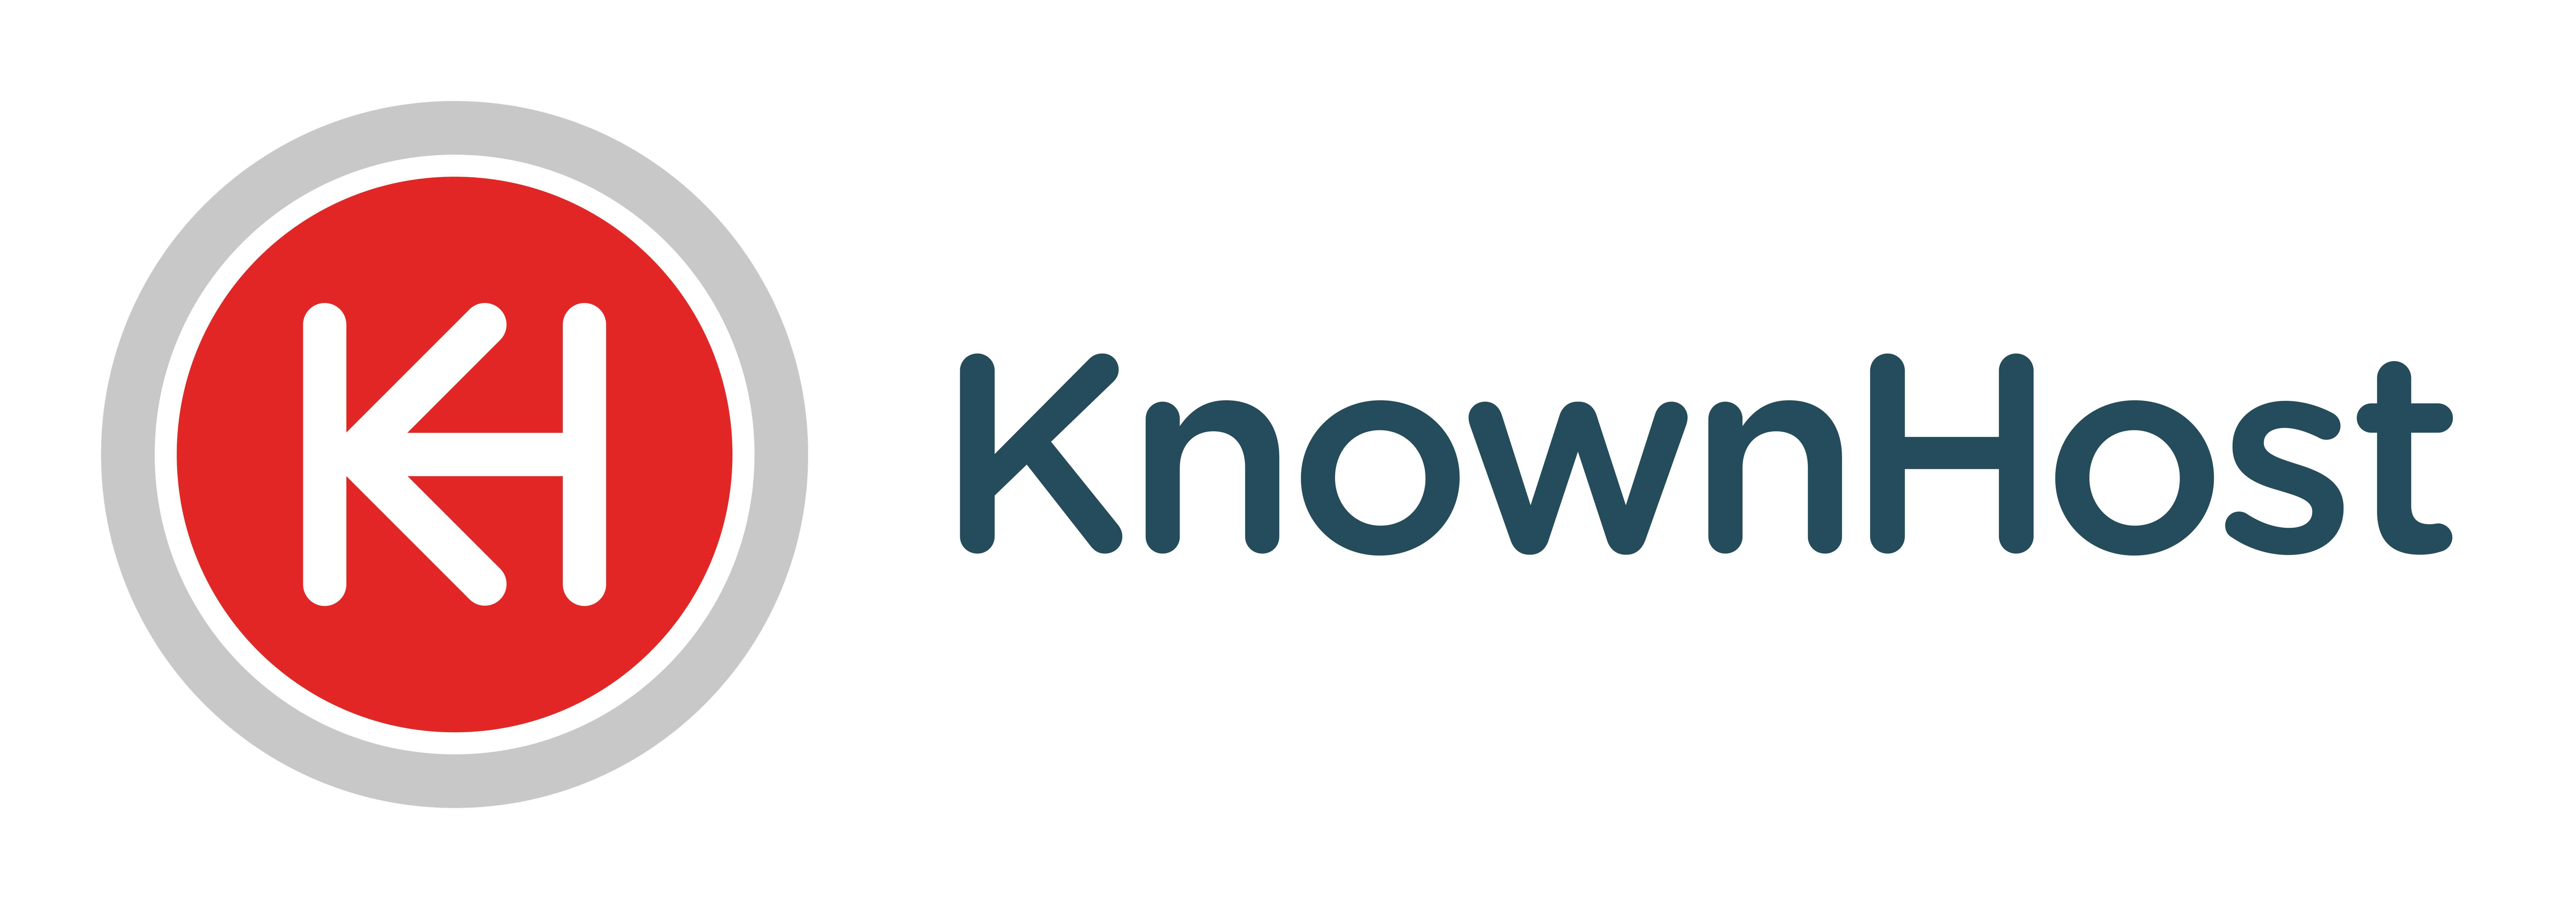 KnownHost Community Forum